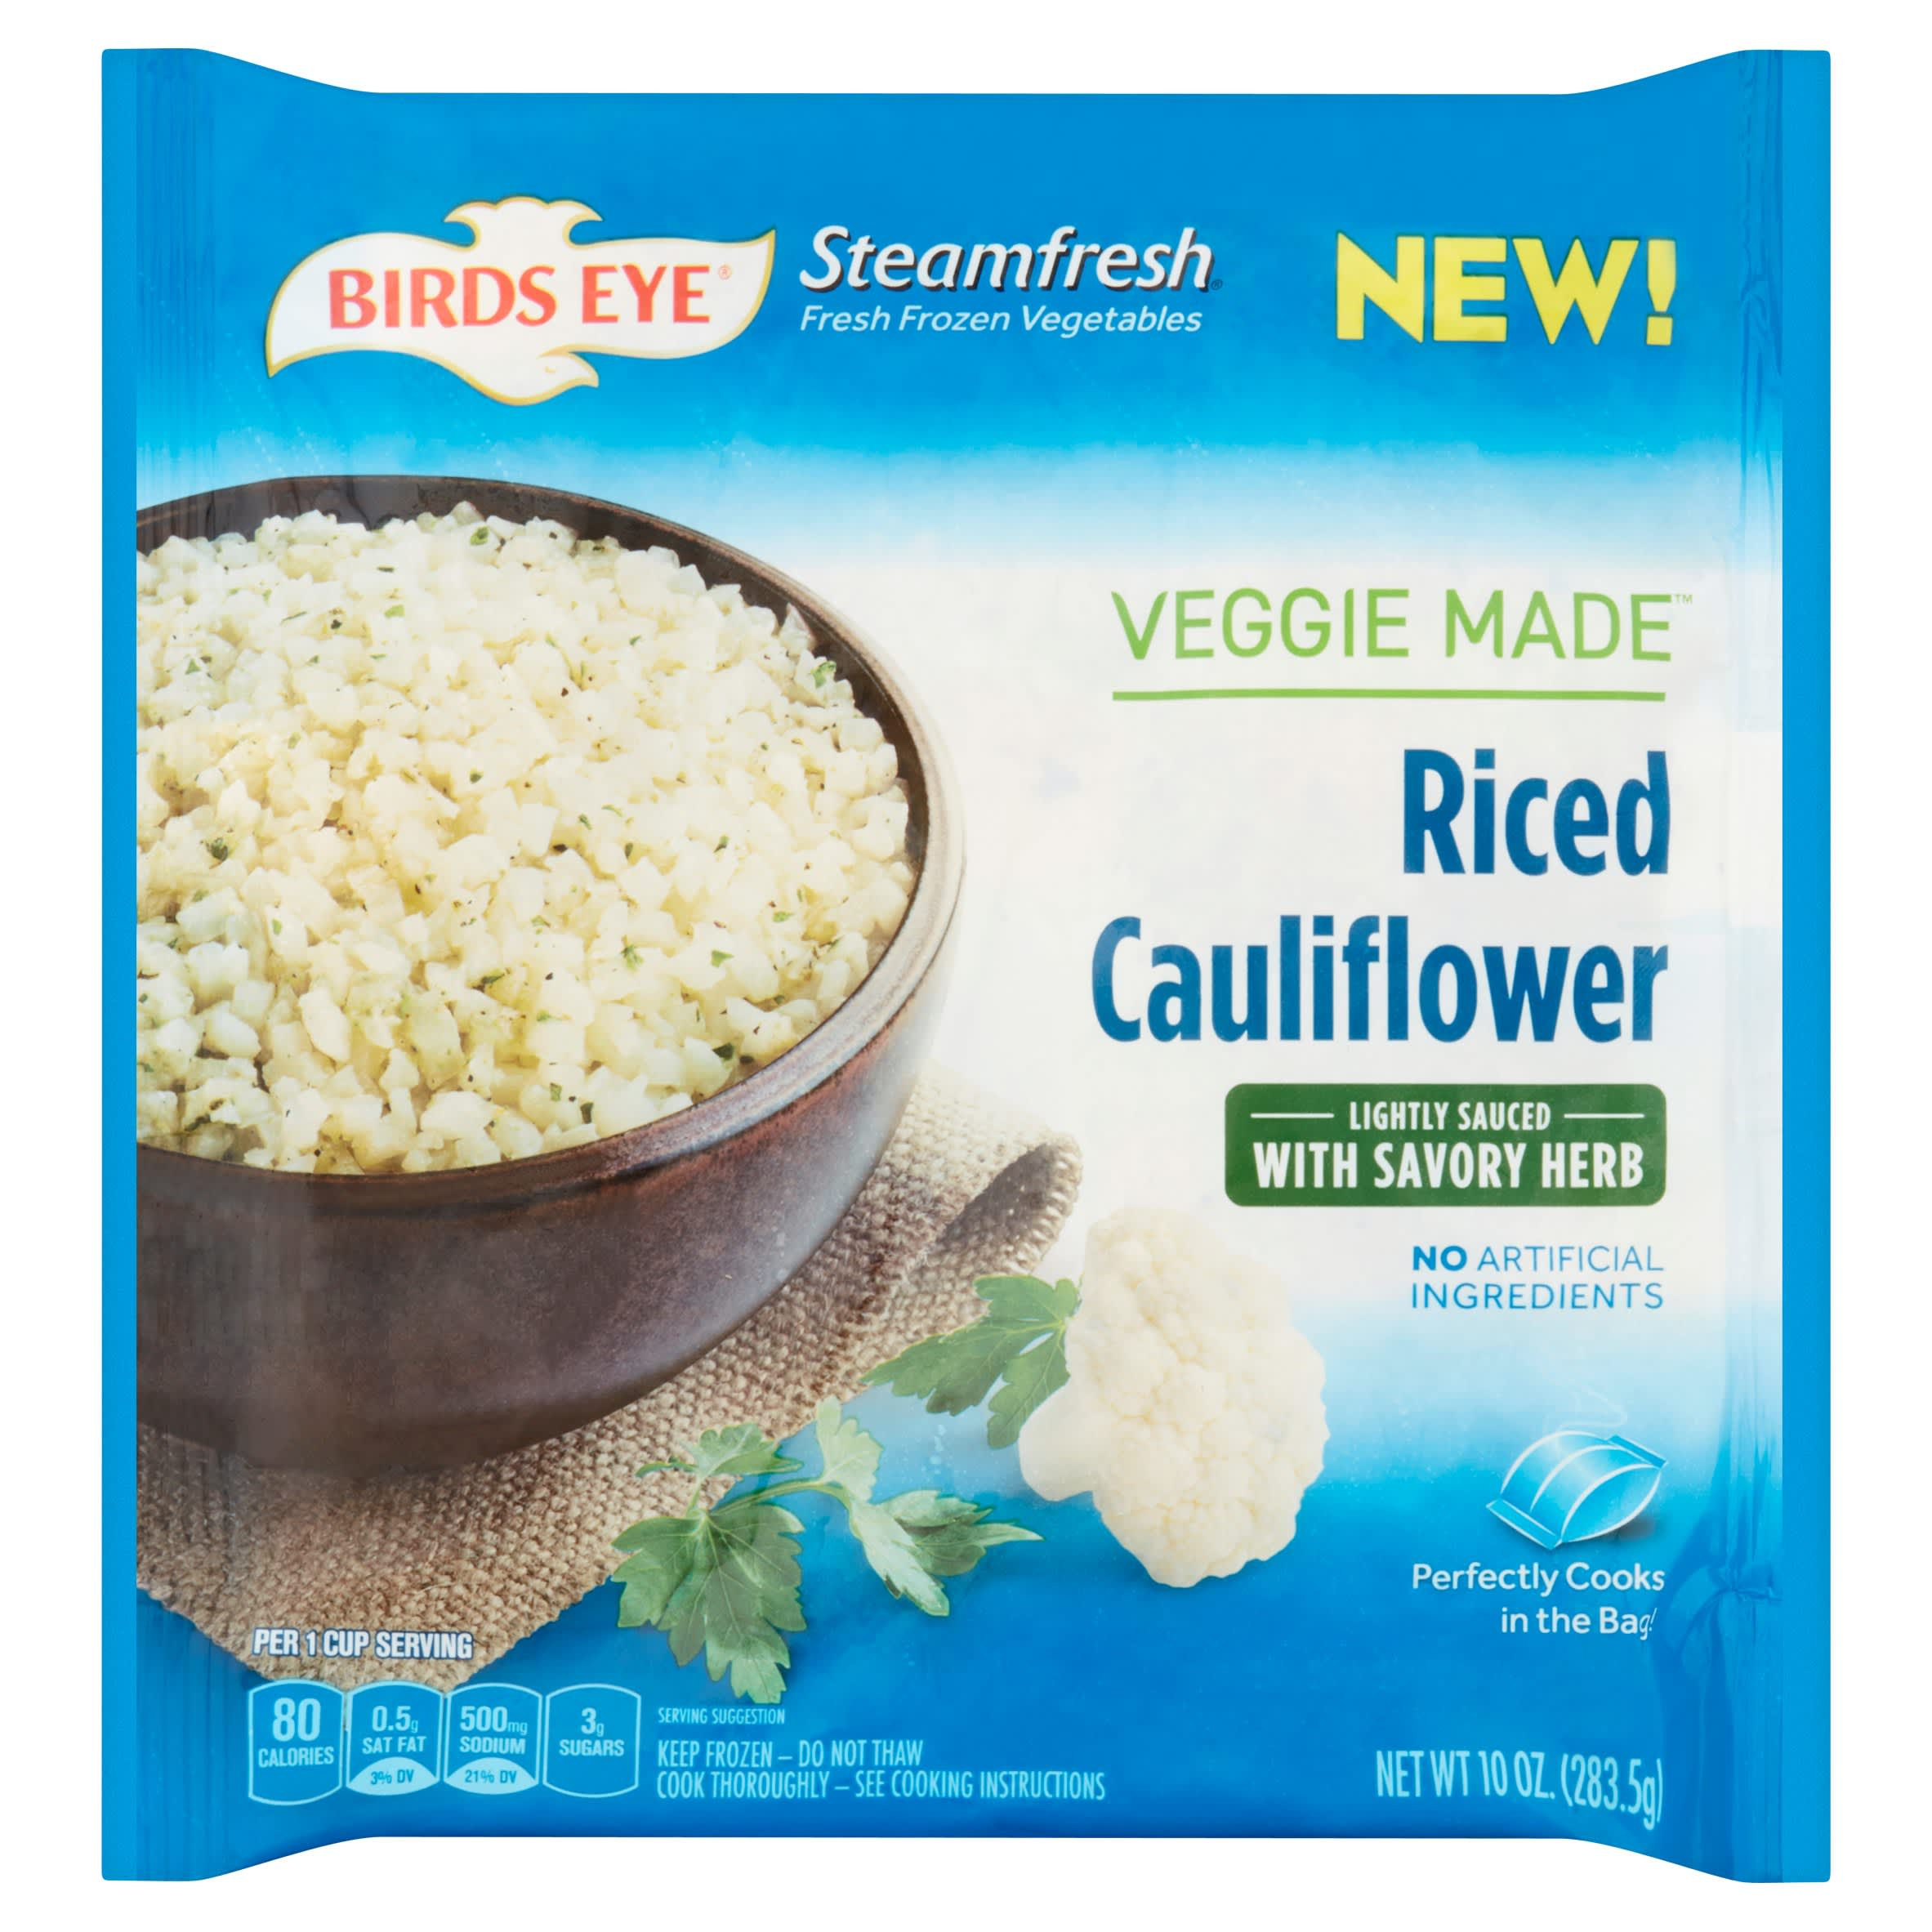 Birds Eye Riced Cauliflower
 The Best Flavored Cauliflower Rice in the Freezer Section